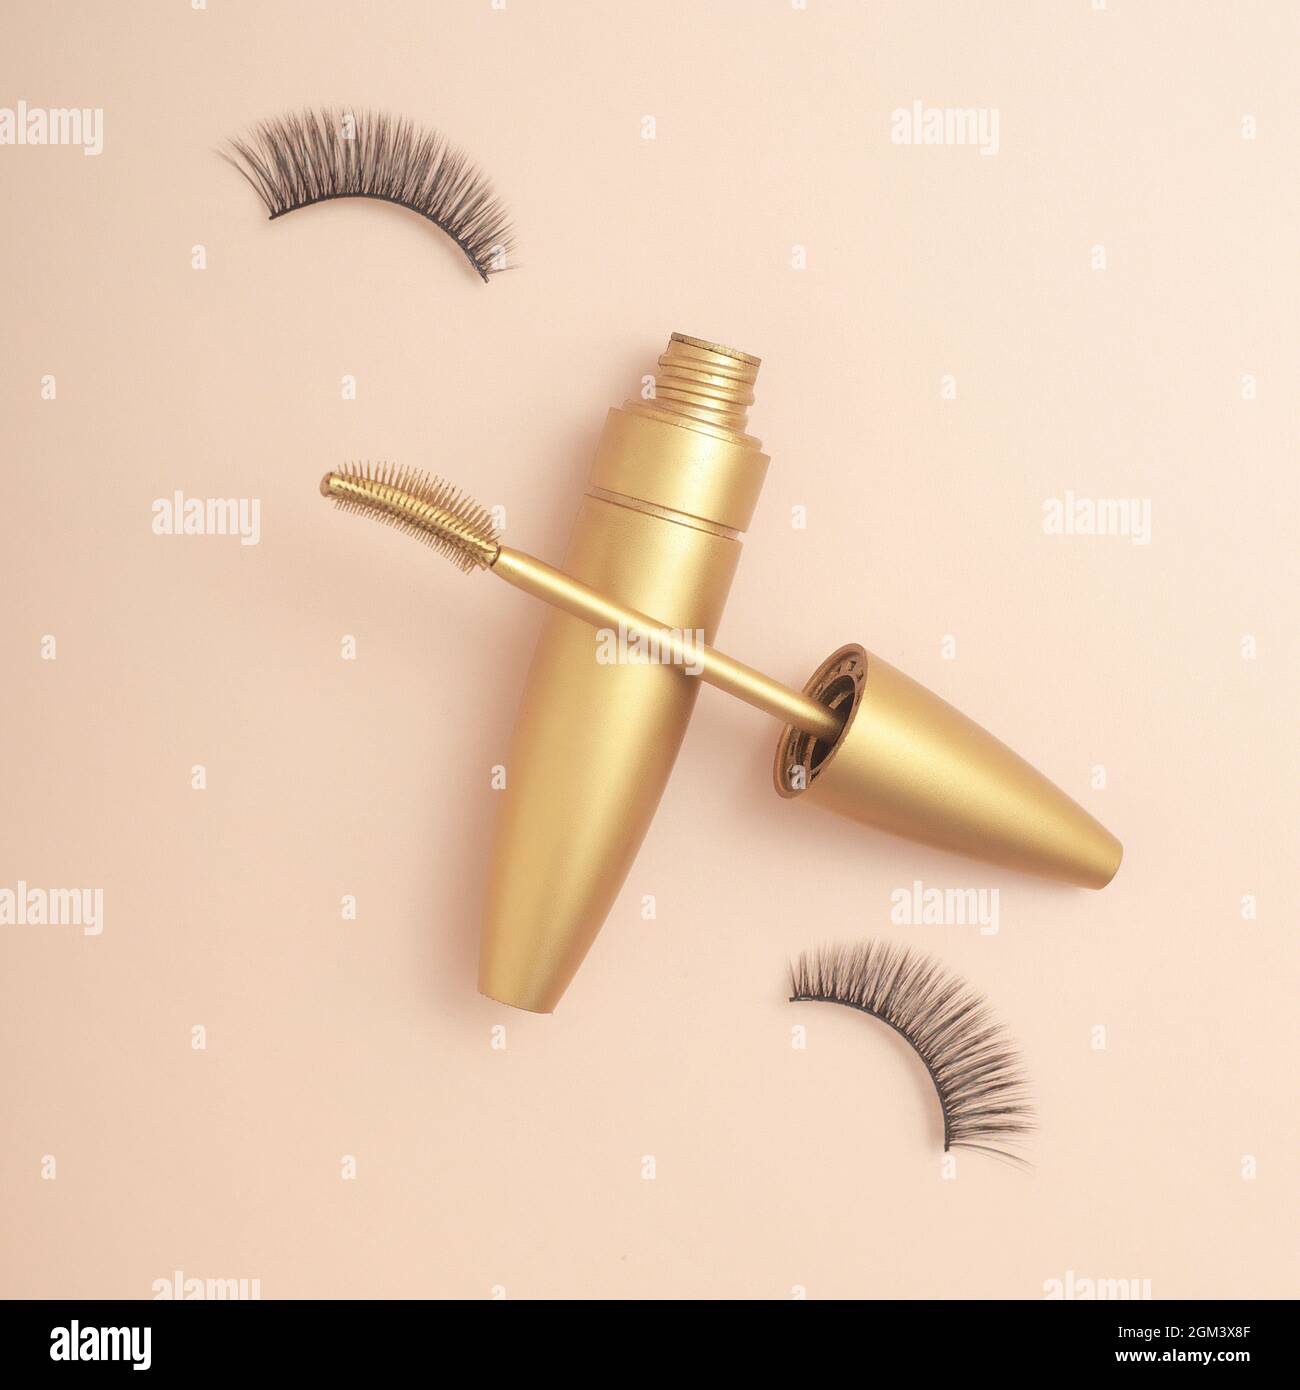 Mascara for eyelashes. Creative advertising photography. Aesthetics and minimalism. Layout top view. Flat lay Stock Photo